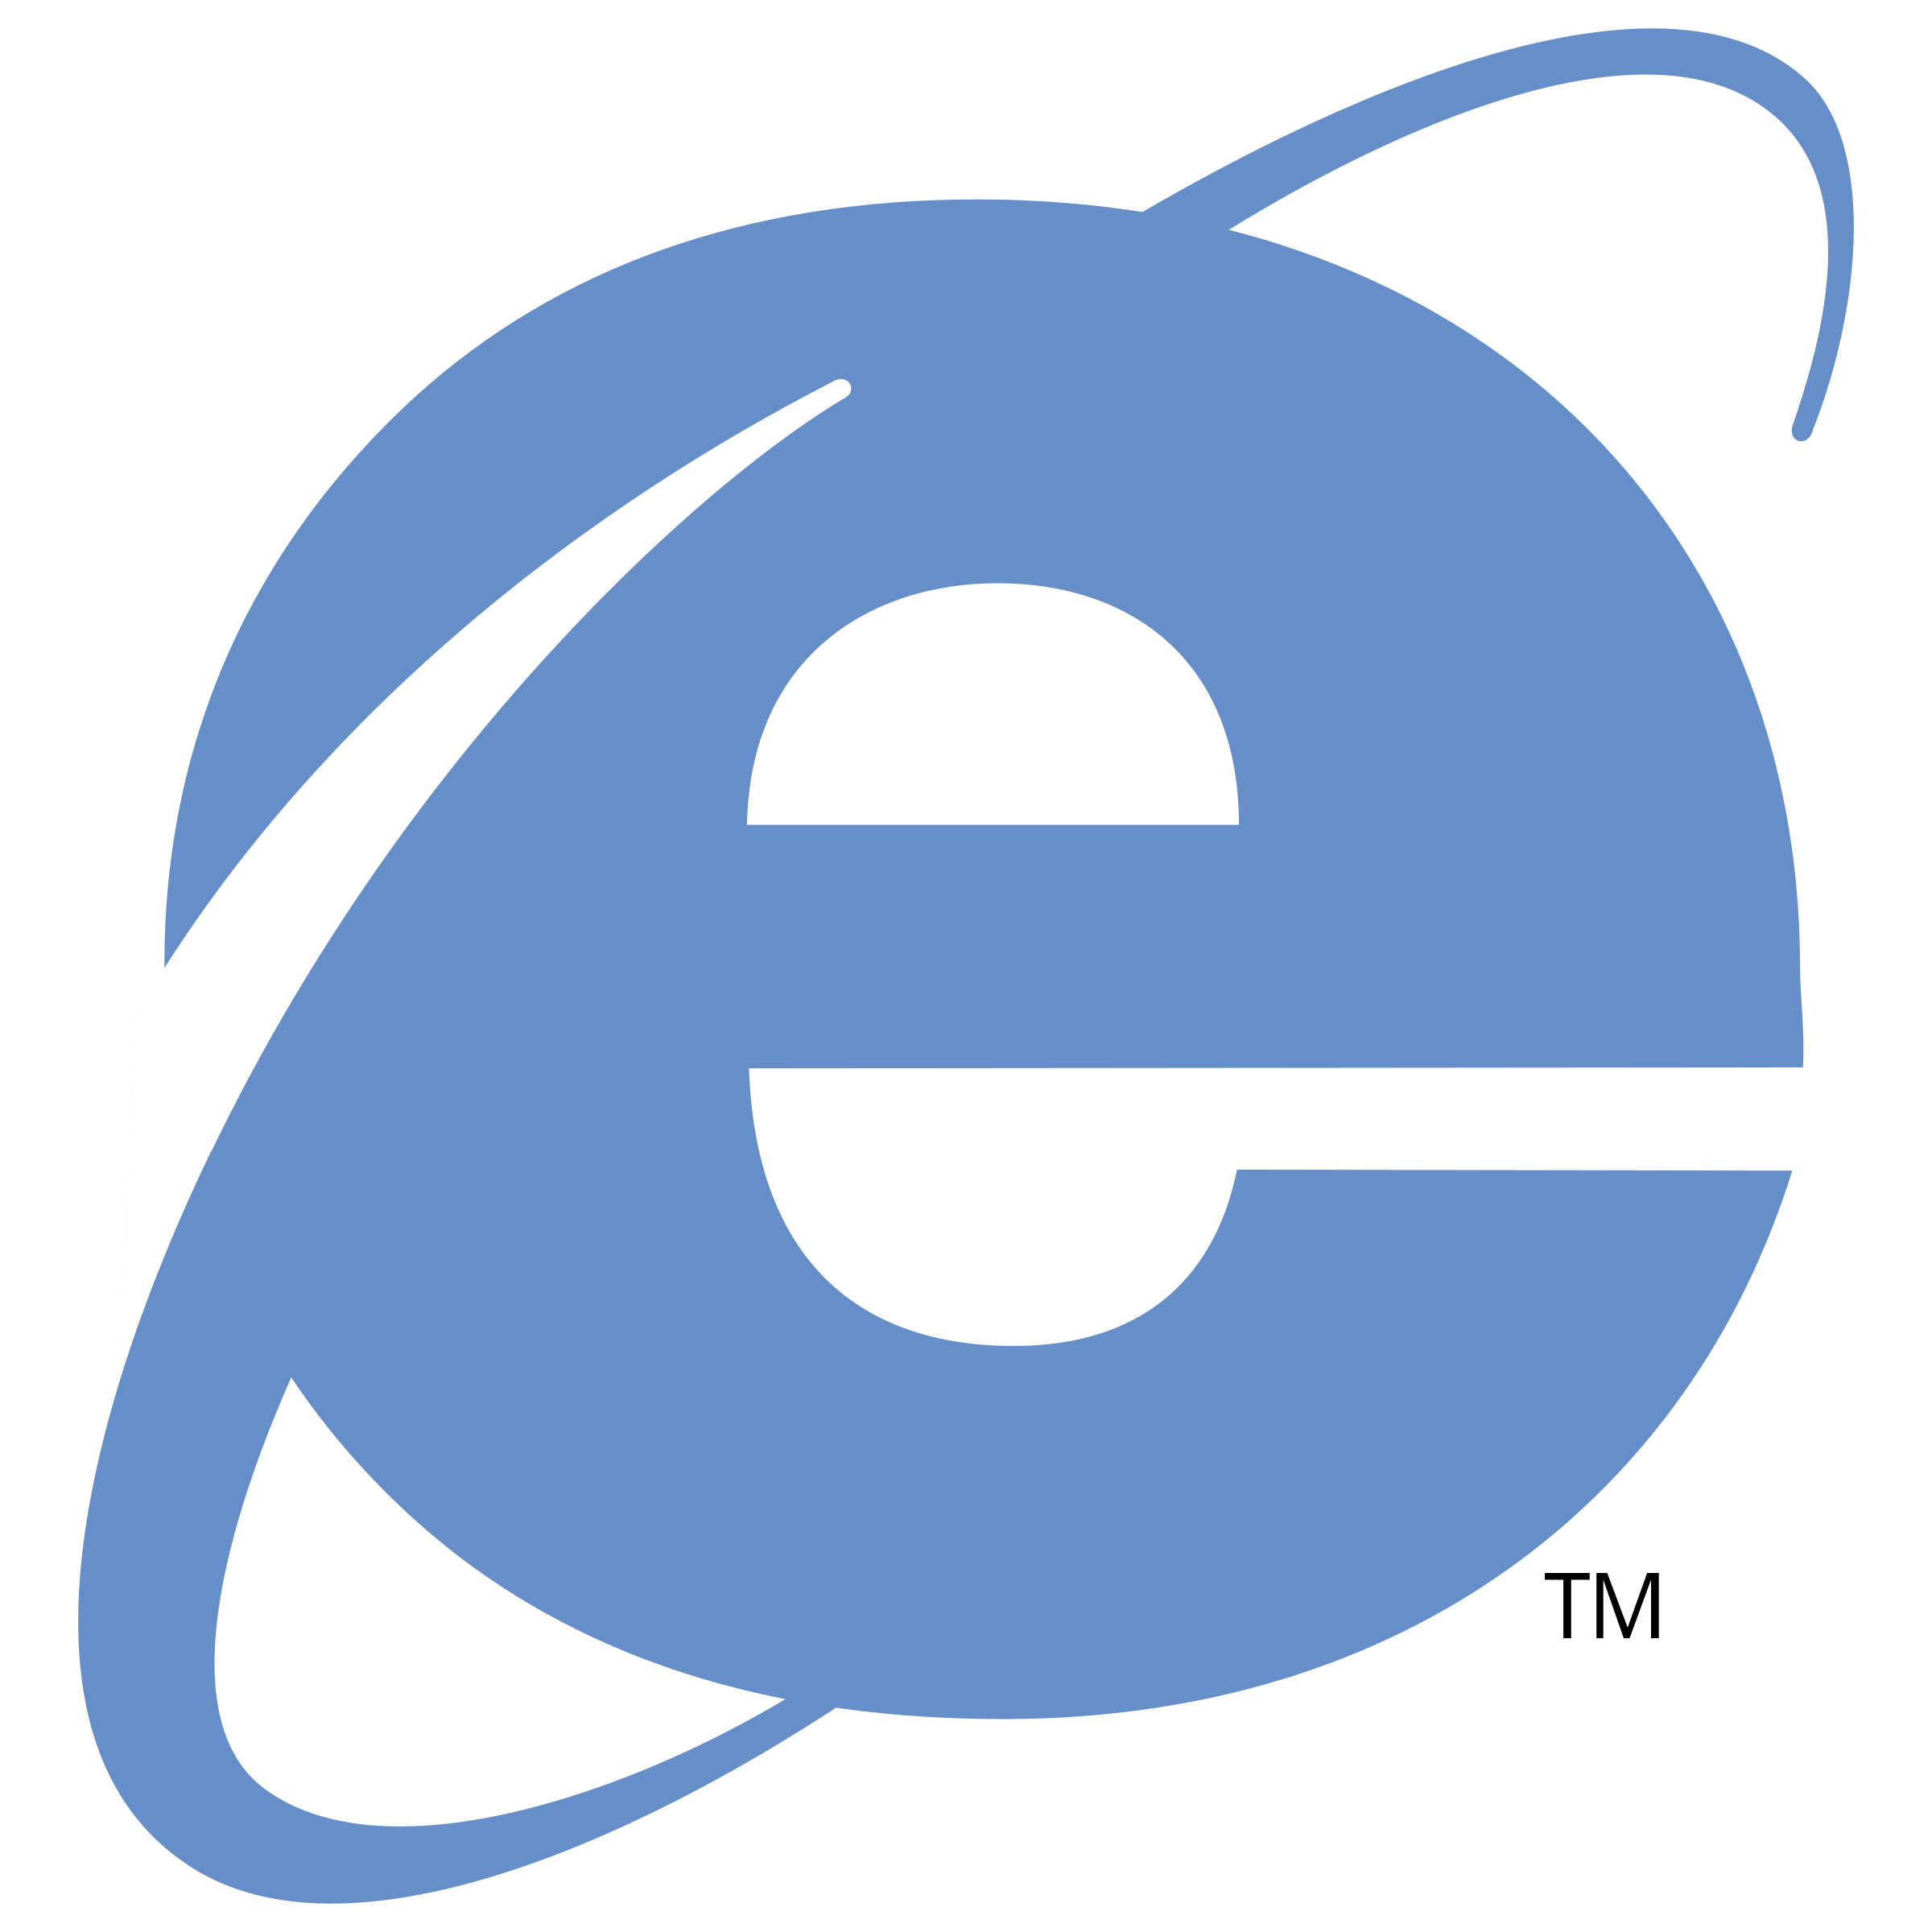 Internet Explorer 1 Logo - Internet Explorer 2 Logo PNG Transparent & SVG Vector - Freebie Supply